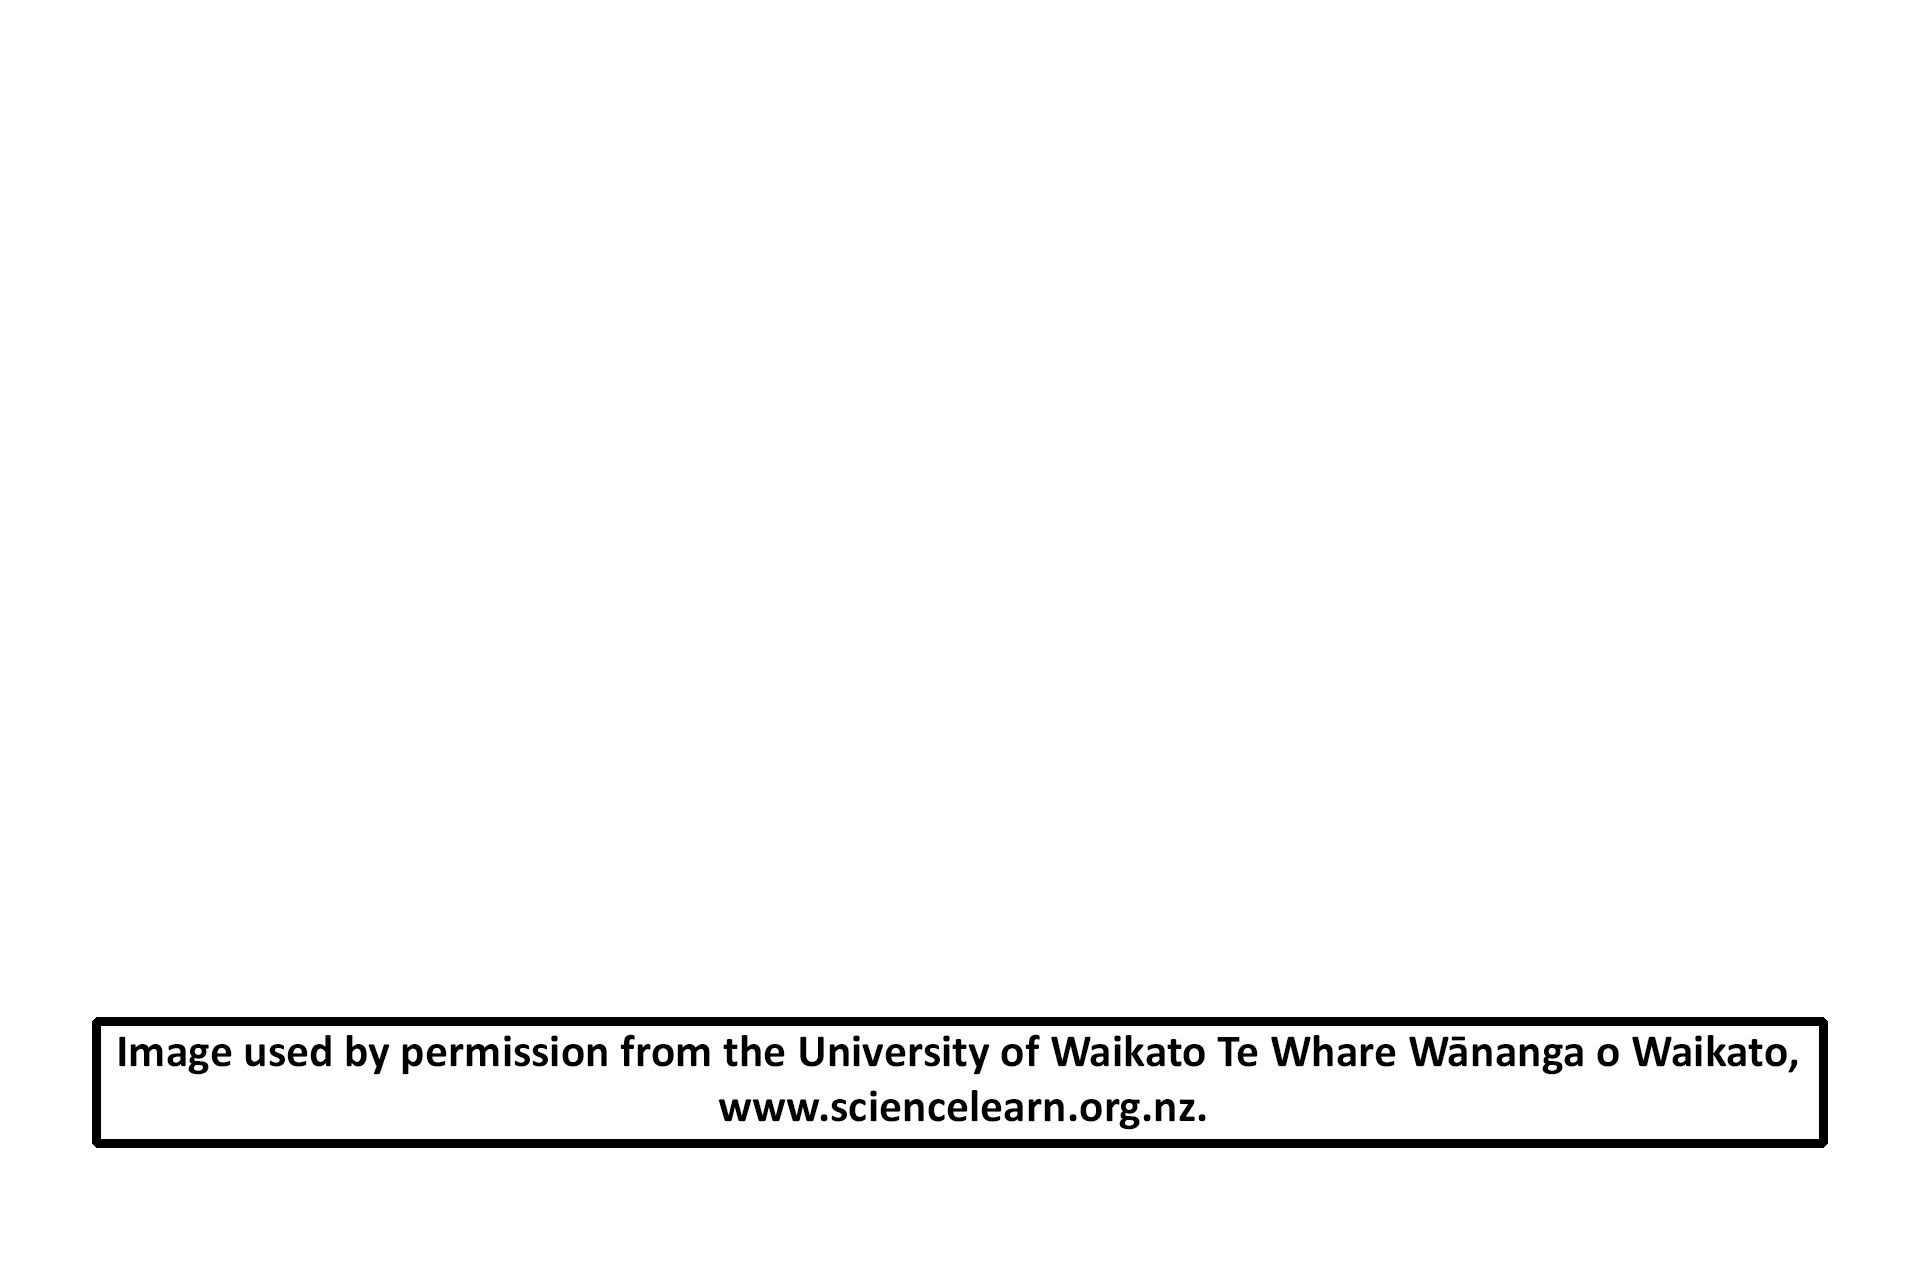 Image source > <p>Image used by permission from the University of Waikato Te Whare Wānanga o Waikato, www.sciencelearn.org.nz.</p>
